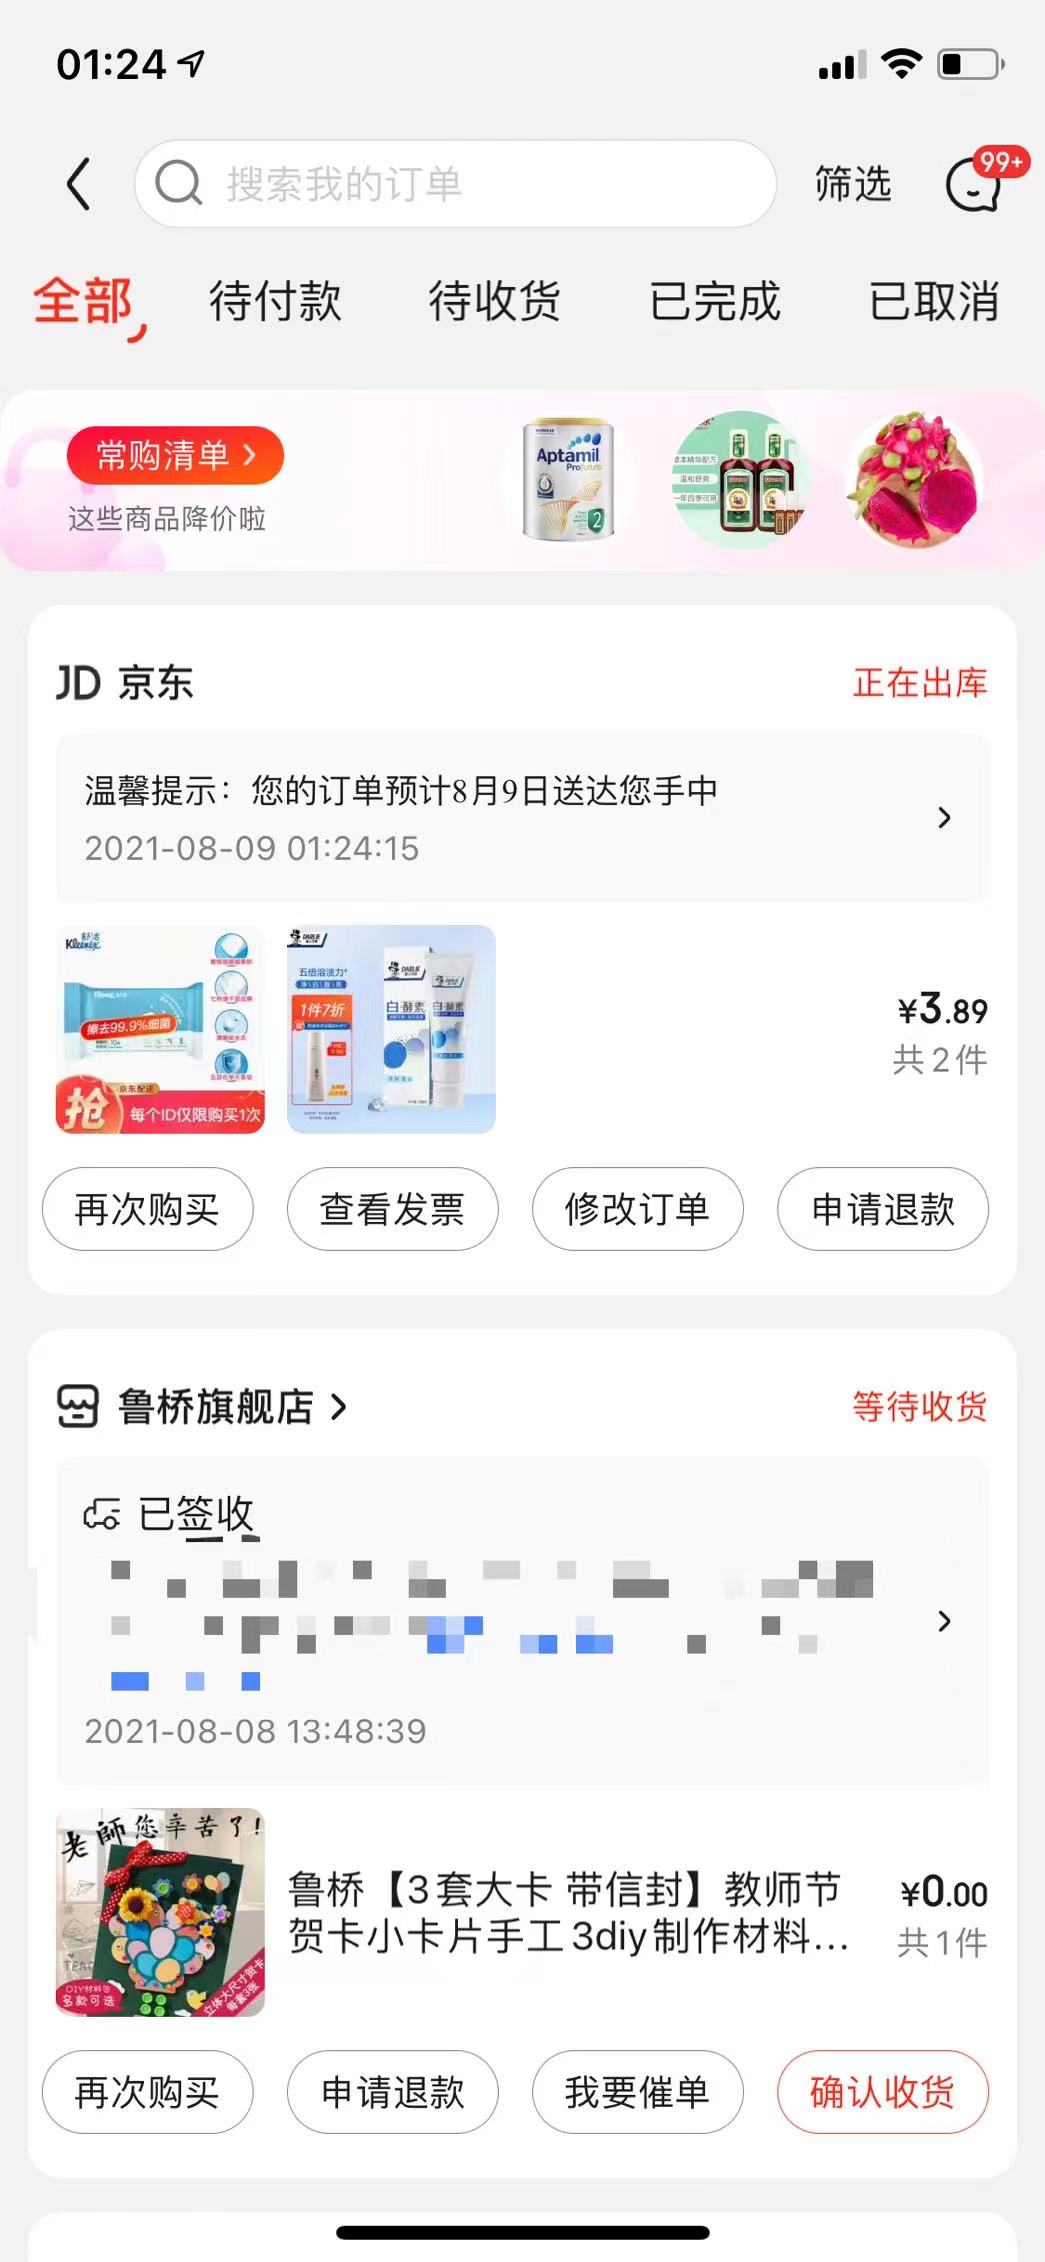 JD自营 黑人牙膏好价-惠小助(52huixz.com)